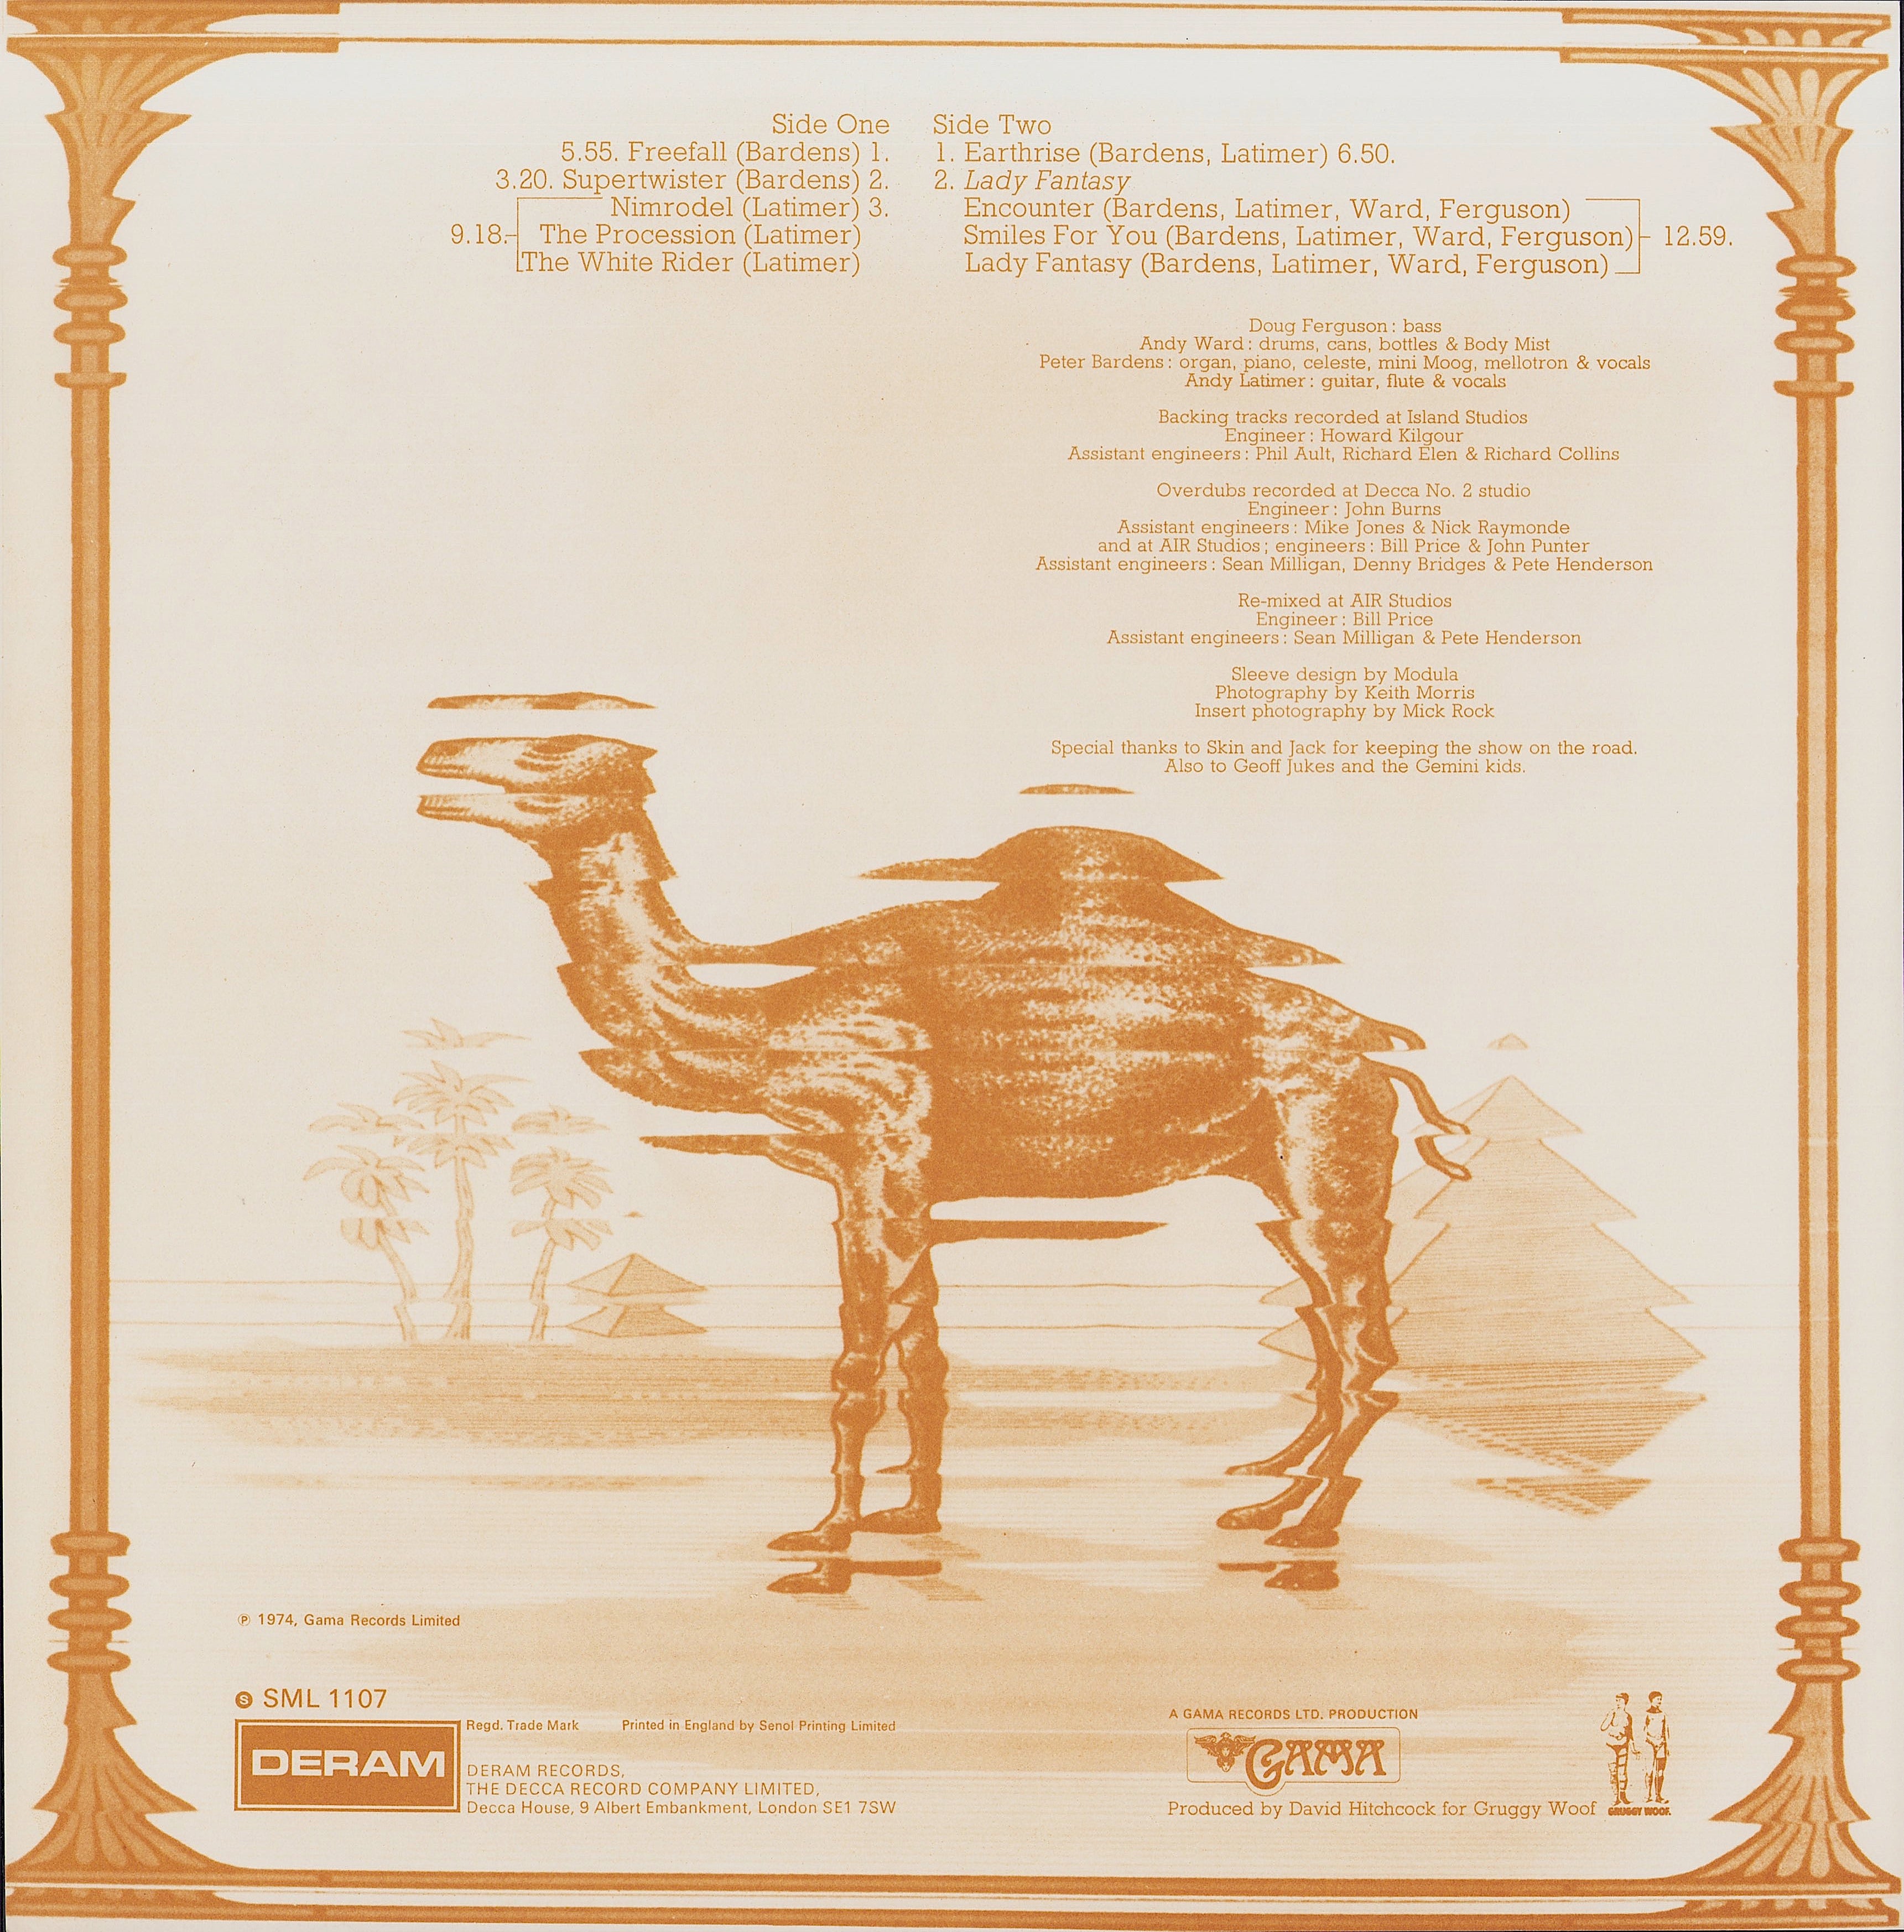 Camel ‎- Mirage (Vinyl LP) UK